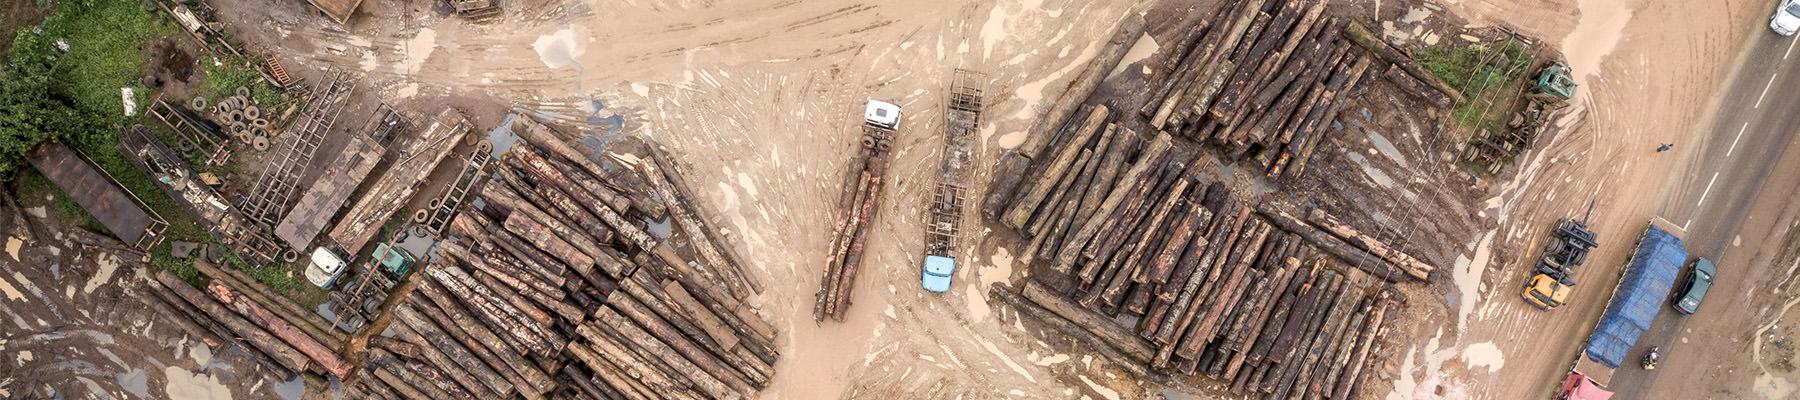 Log stockpile along the main road into Douala, Cameroon. Photo: TRAFFIC / A. Walmsley